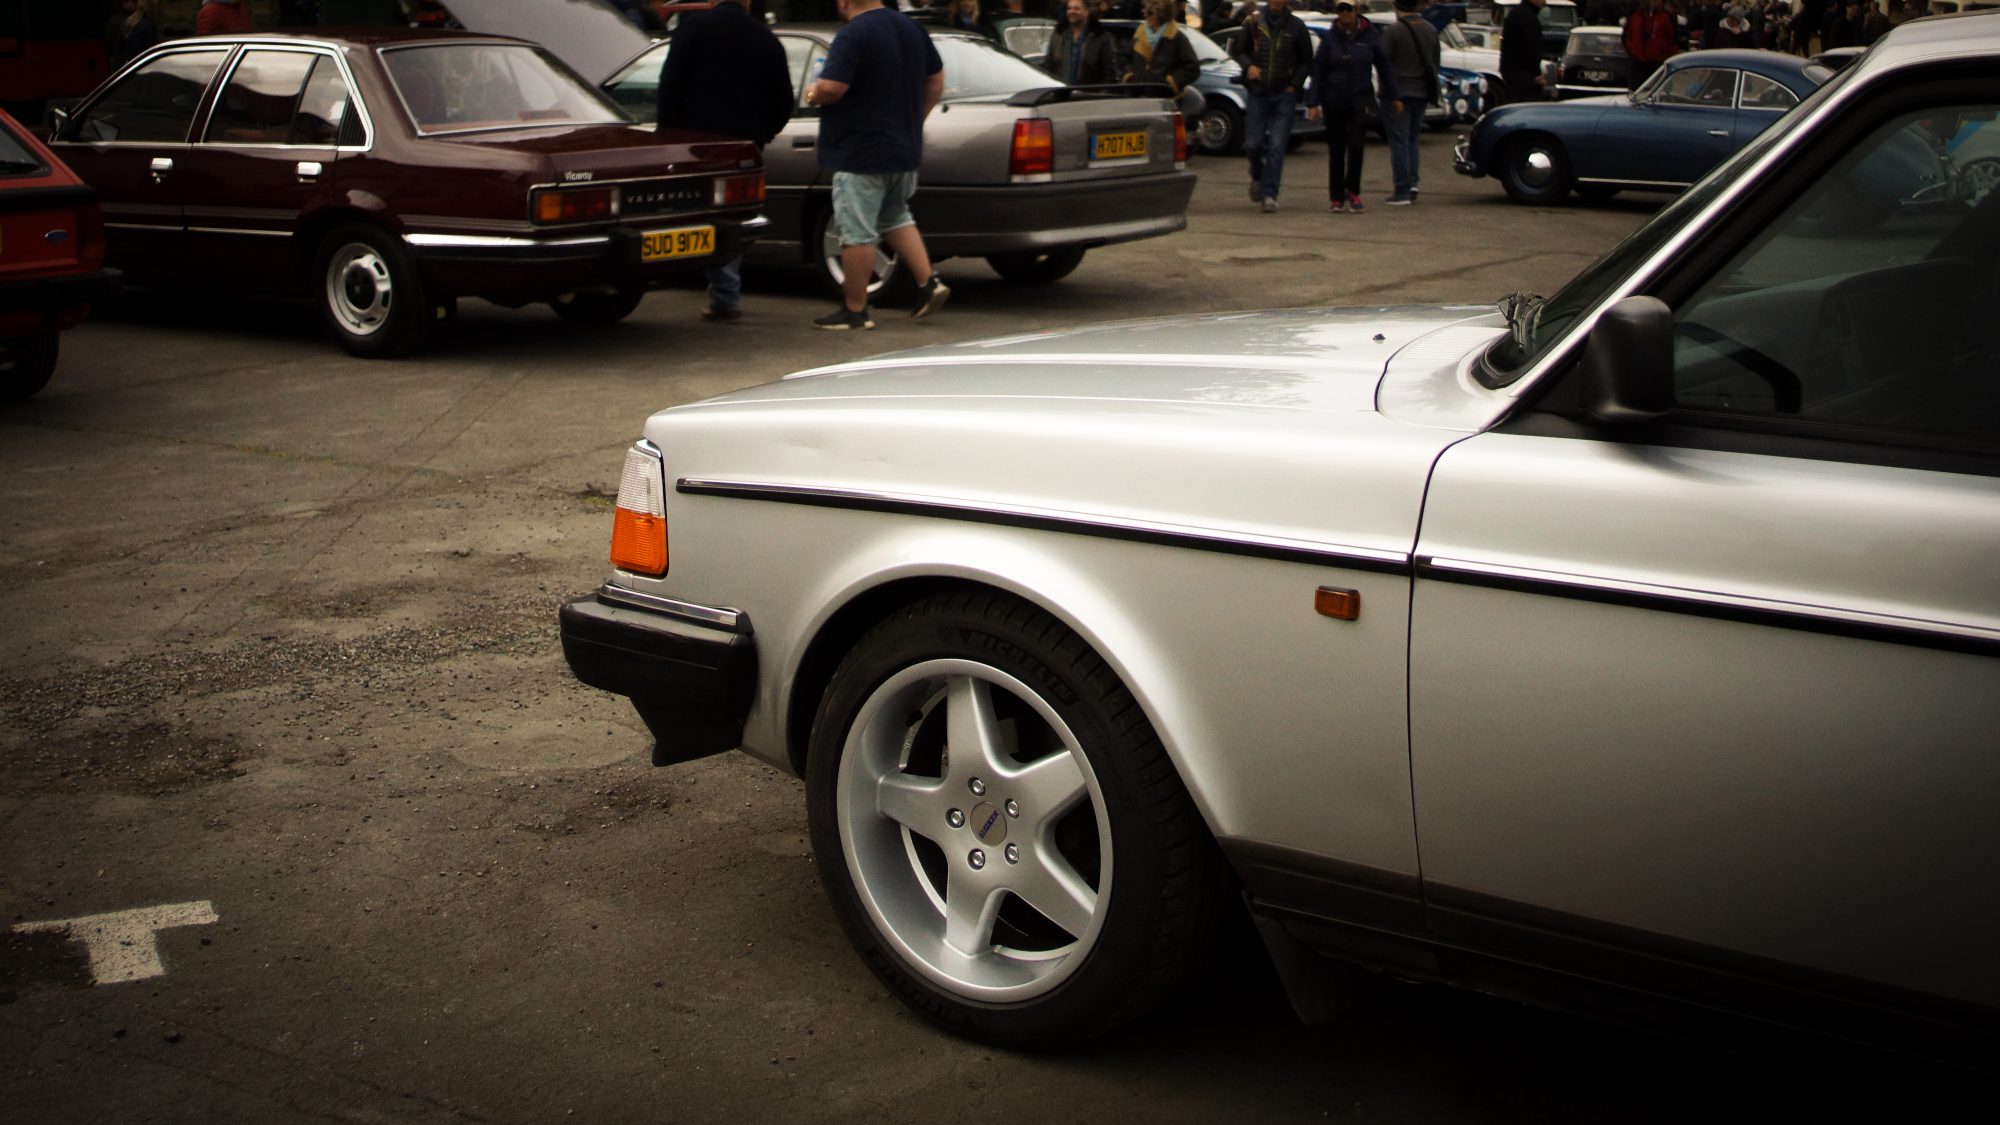 Bicester Heritage, Sunday Scramble, Drive it day, classic car, retro car, car show, Volvo 240